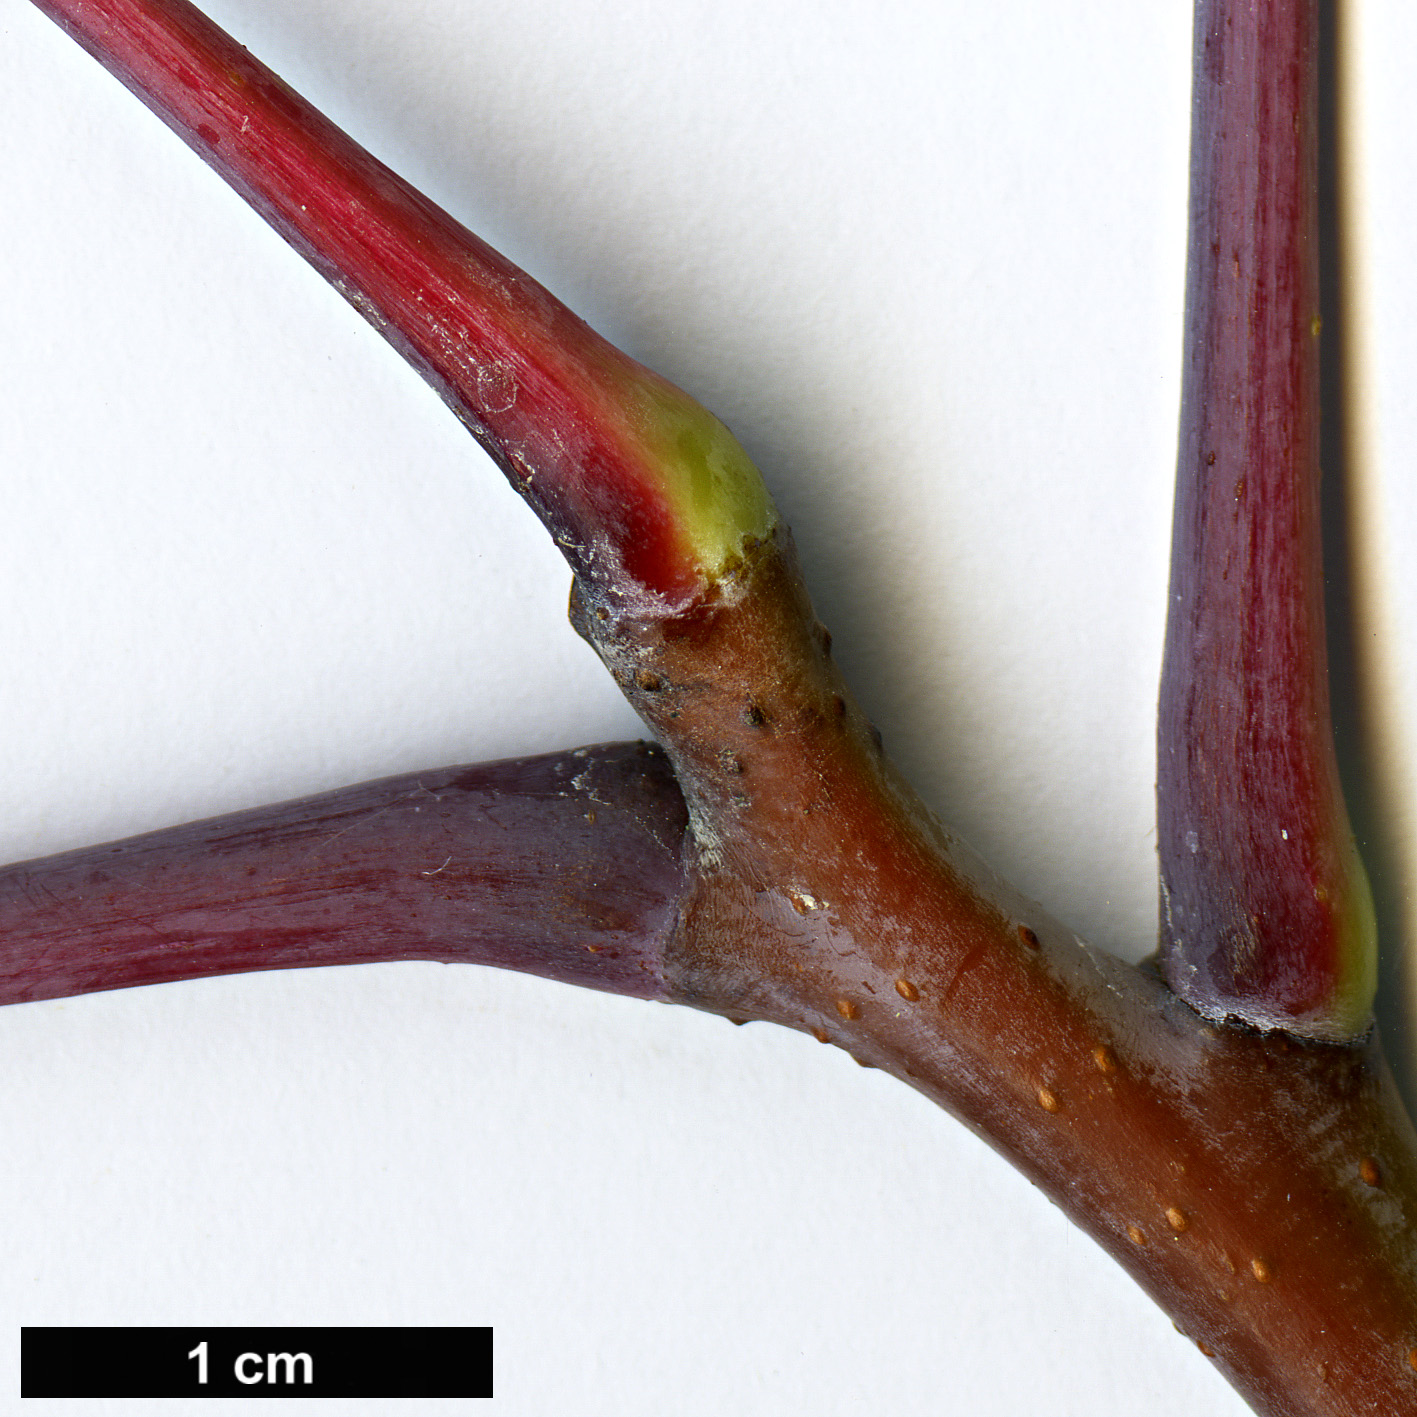 High resolution image: Family: Anacardiaceae - Genus: Rhus - Taxon: glabra